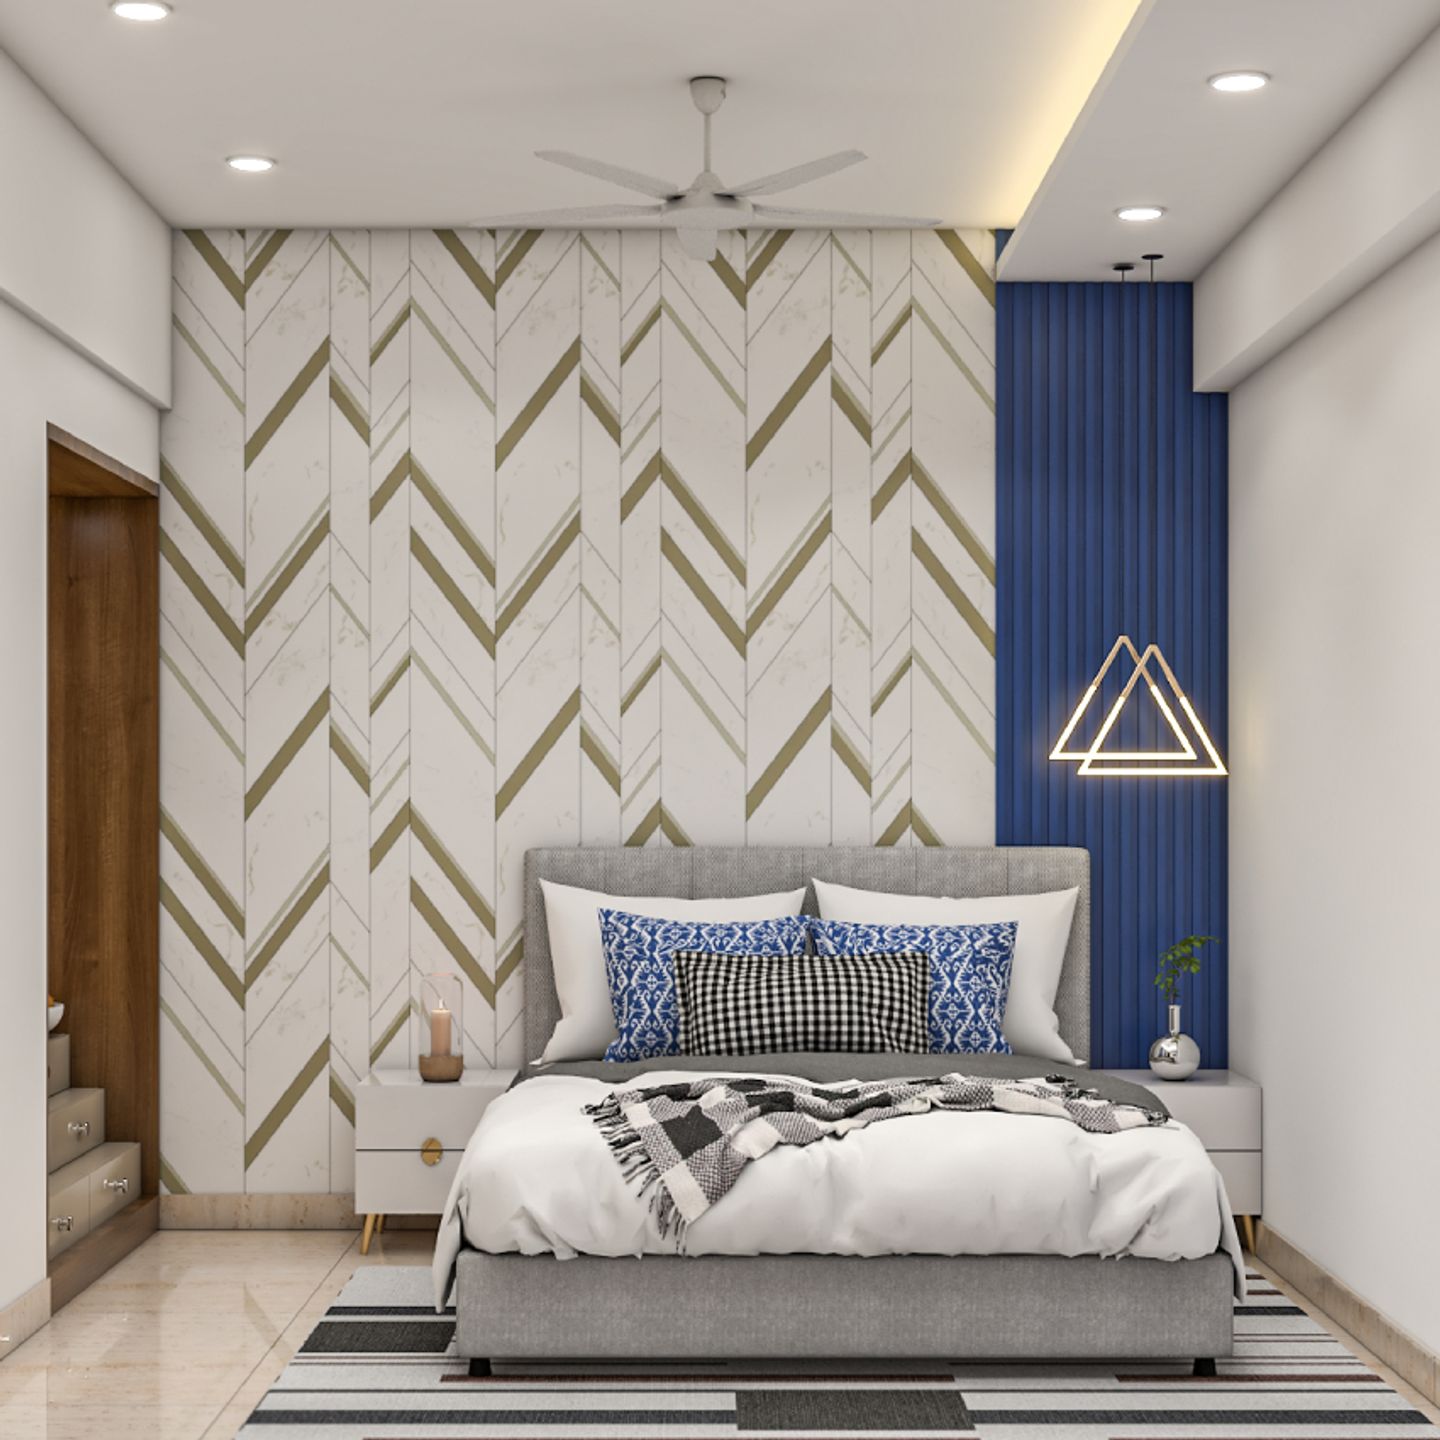 Guest Room Design With Chevron Wallpaper - Livspace